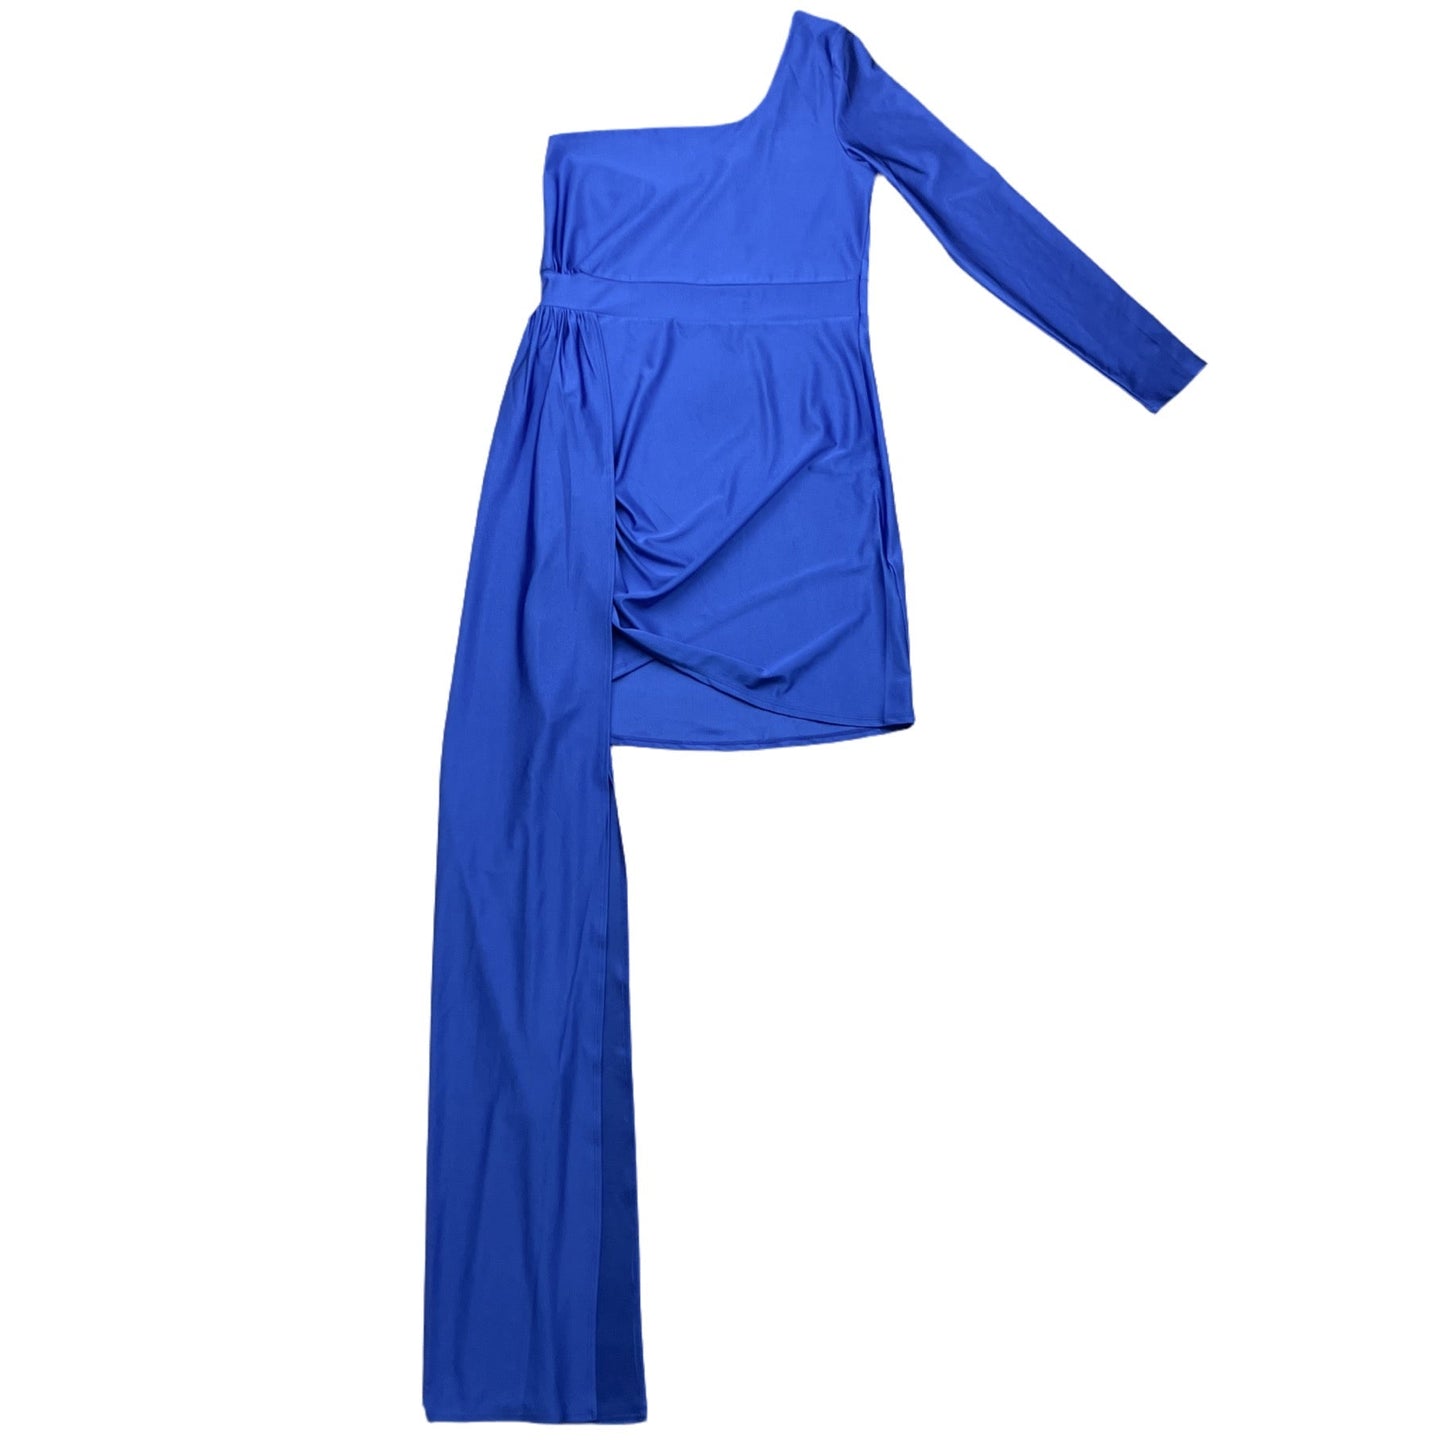 Blue Dress Casual Short By Fashion Nova, Size: 1x